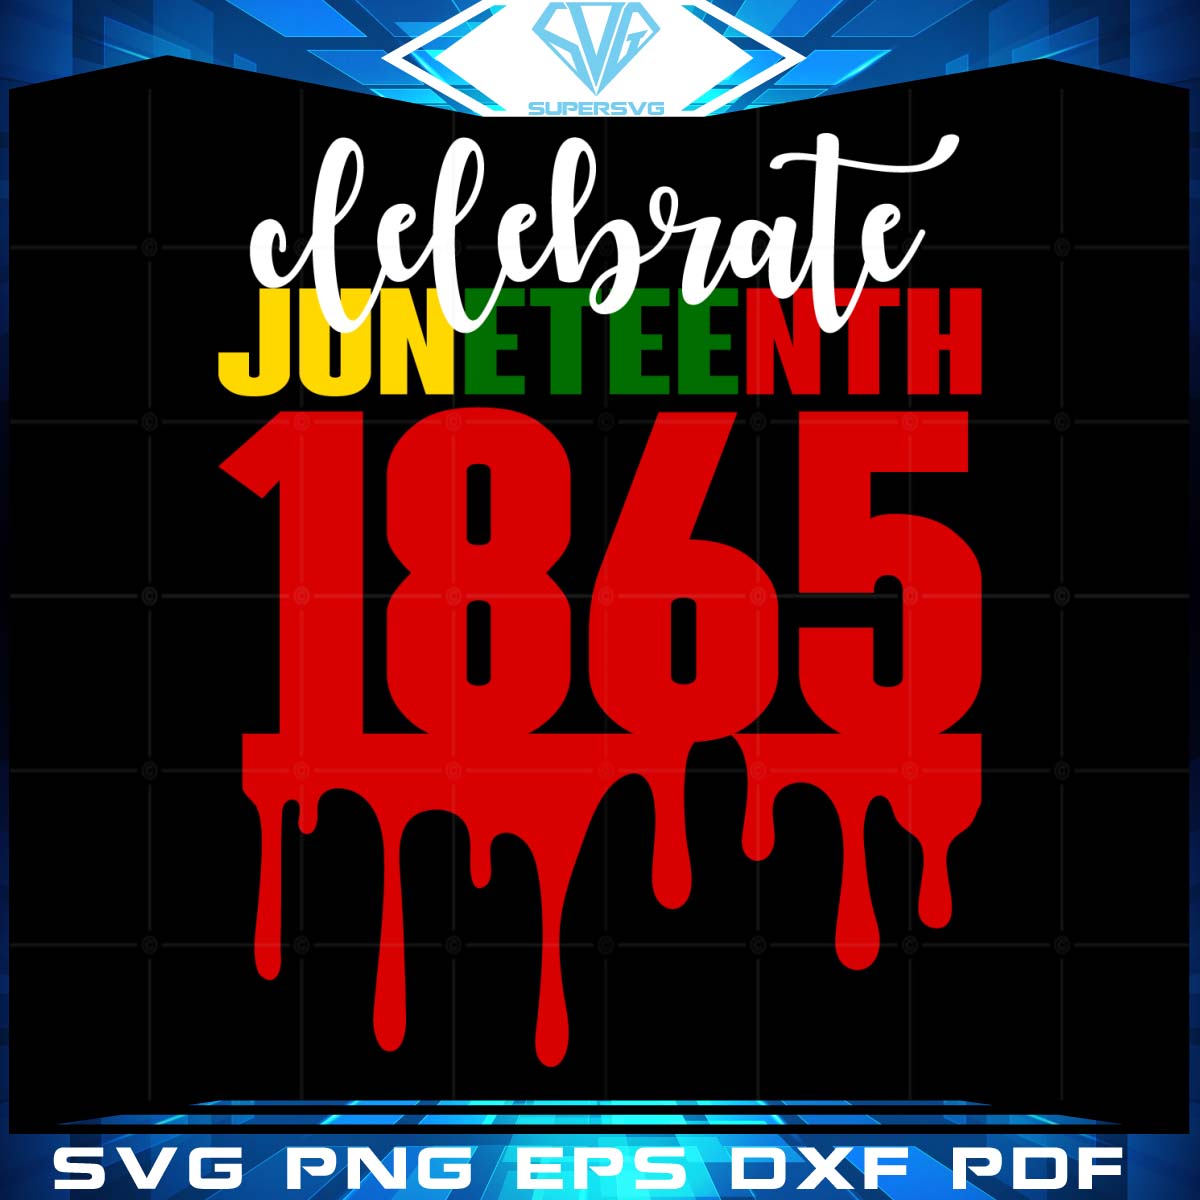 Celebrate Juneteenth 1865 Dripping Svg